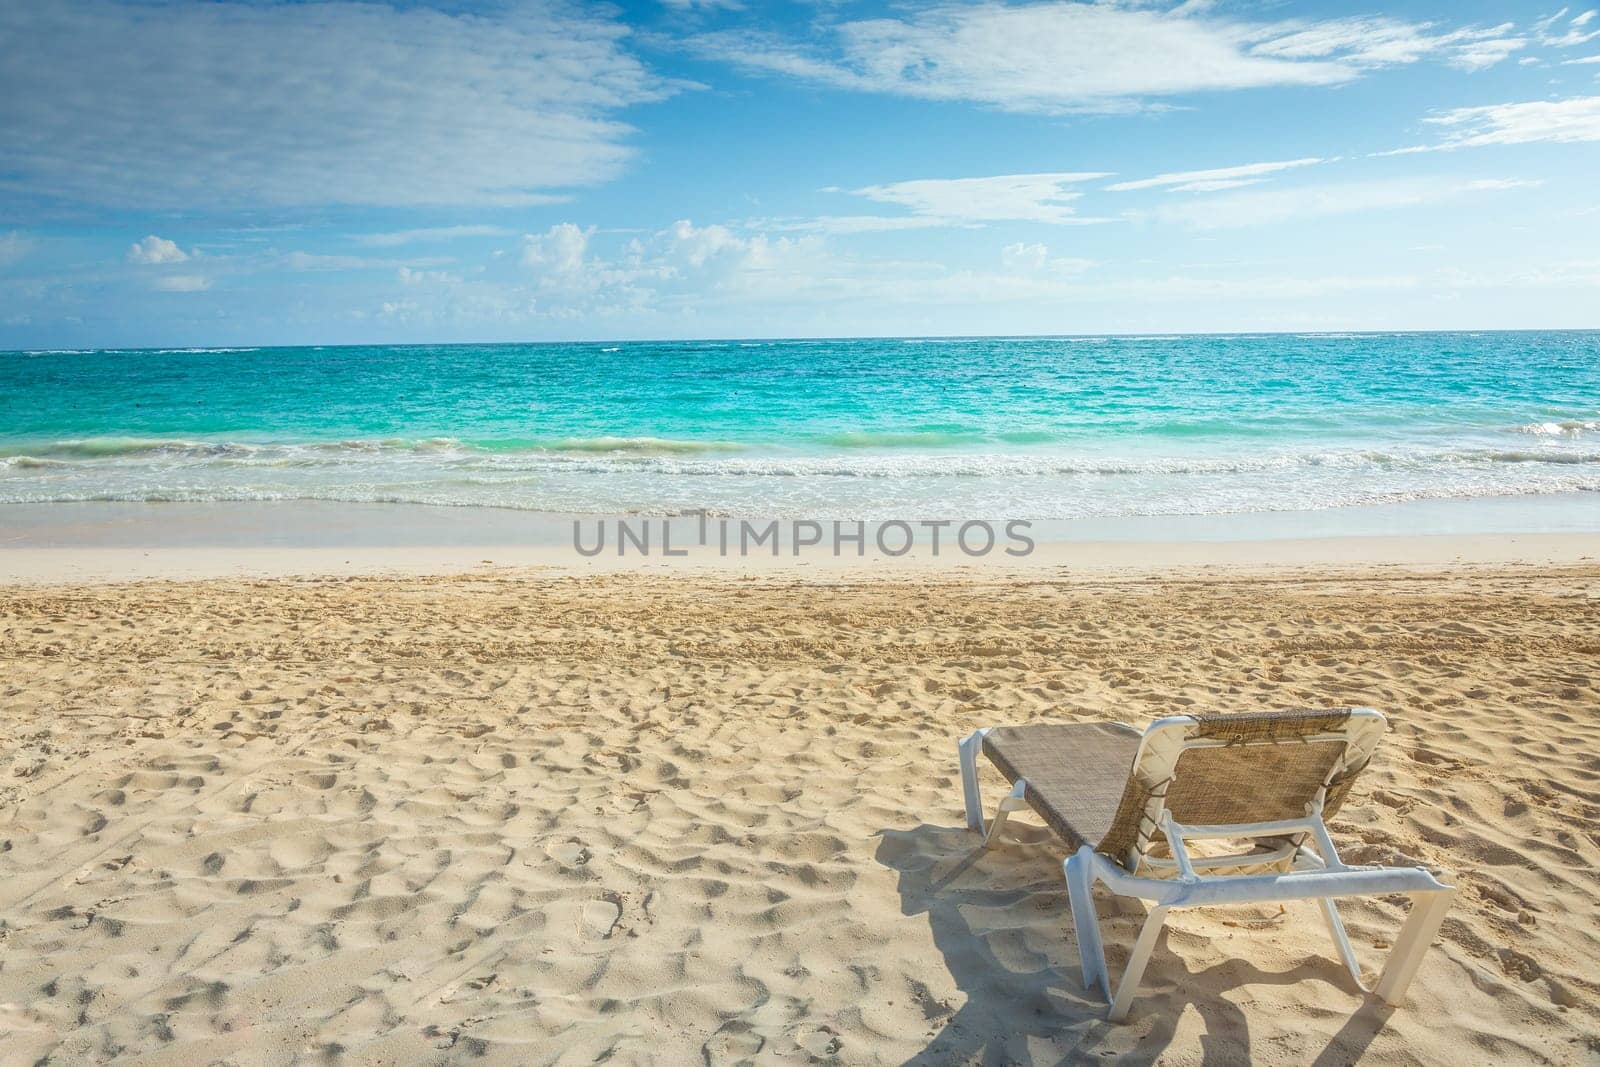 lounge sunbed and secluded eagle beach on Aruba island, Caribbean sea by positivetravelart